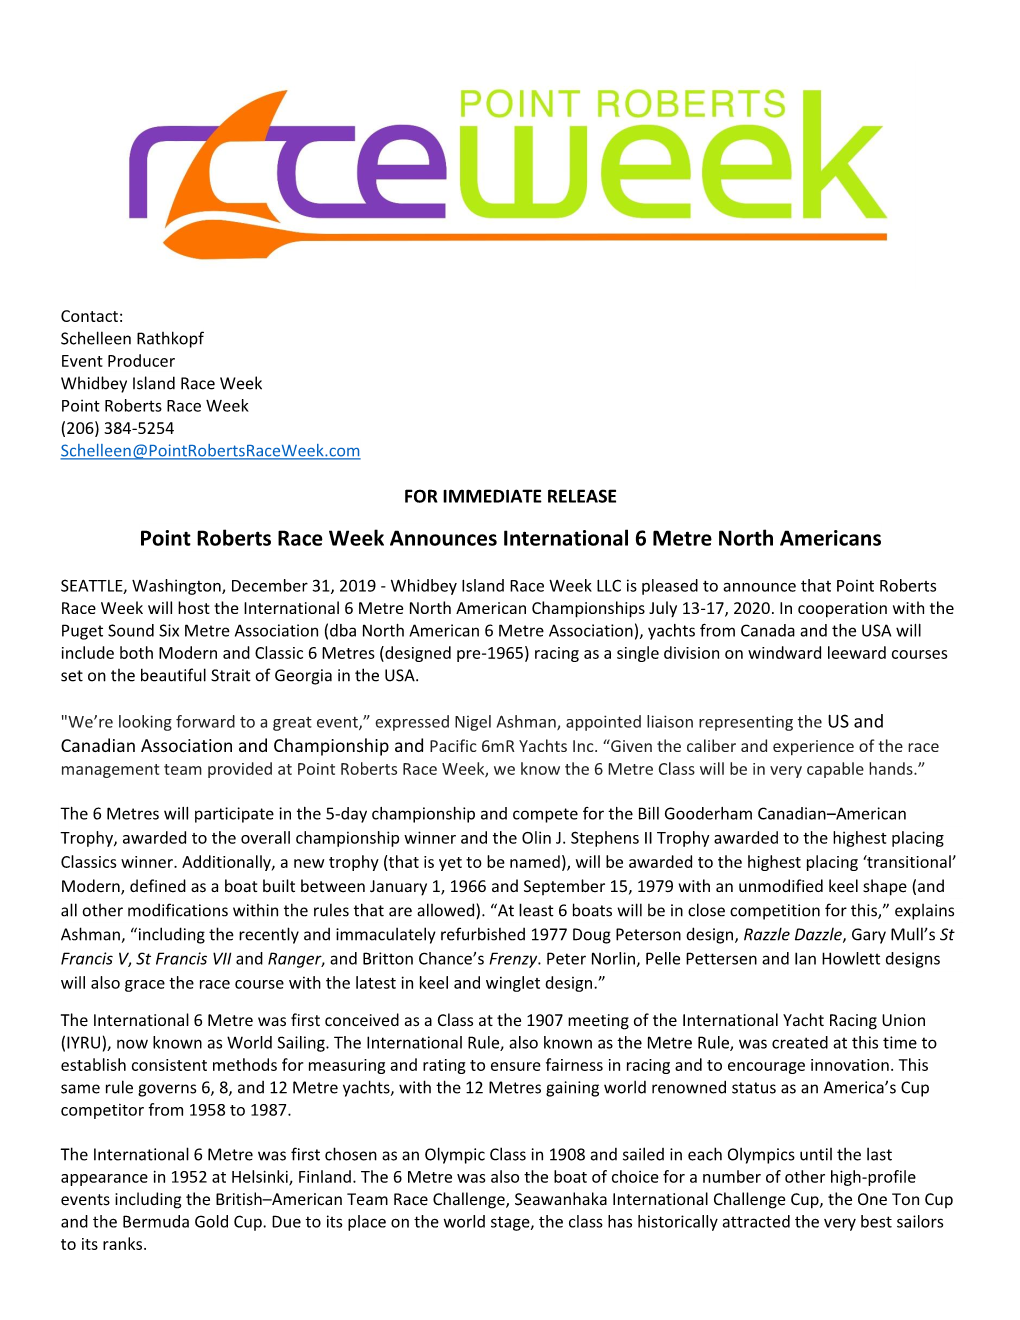 Point Roberts Race Week Announces International 6 Metre North Americans